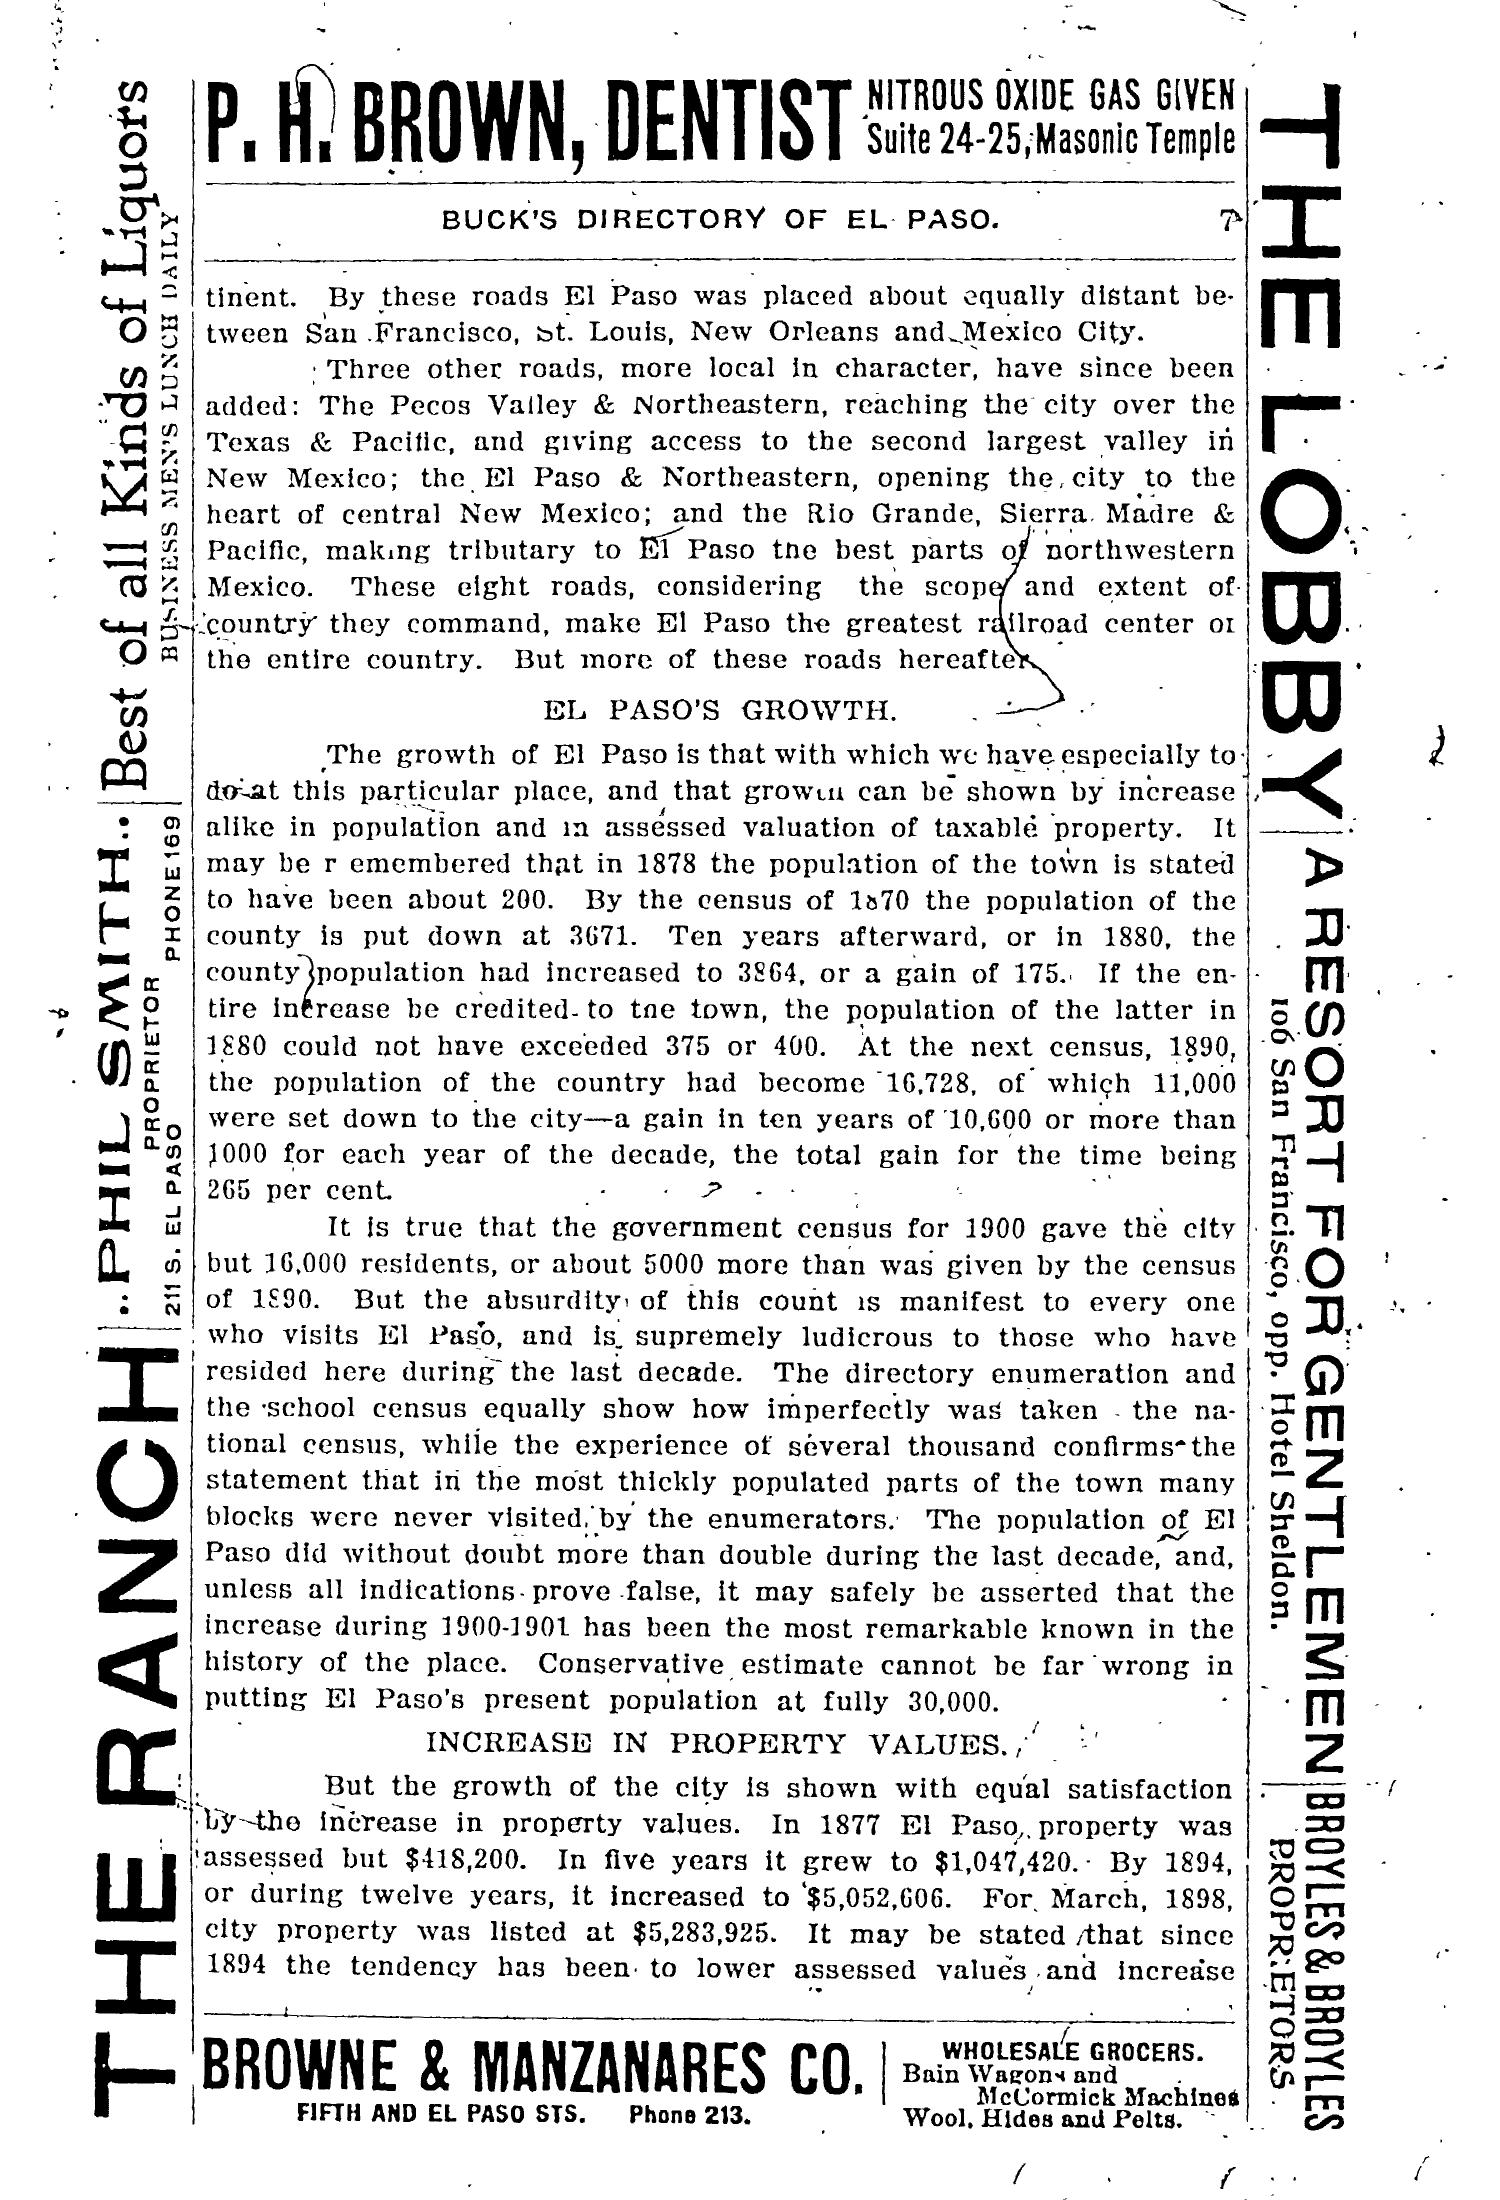 Buck's Directory of El Paso for 1902
                                                
                                                    7
                                                